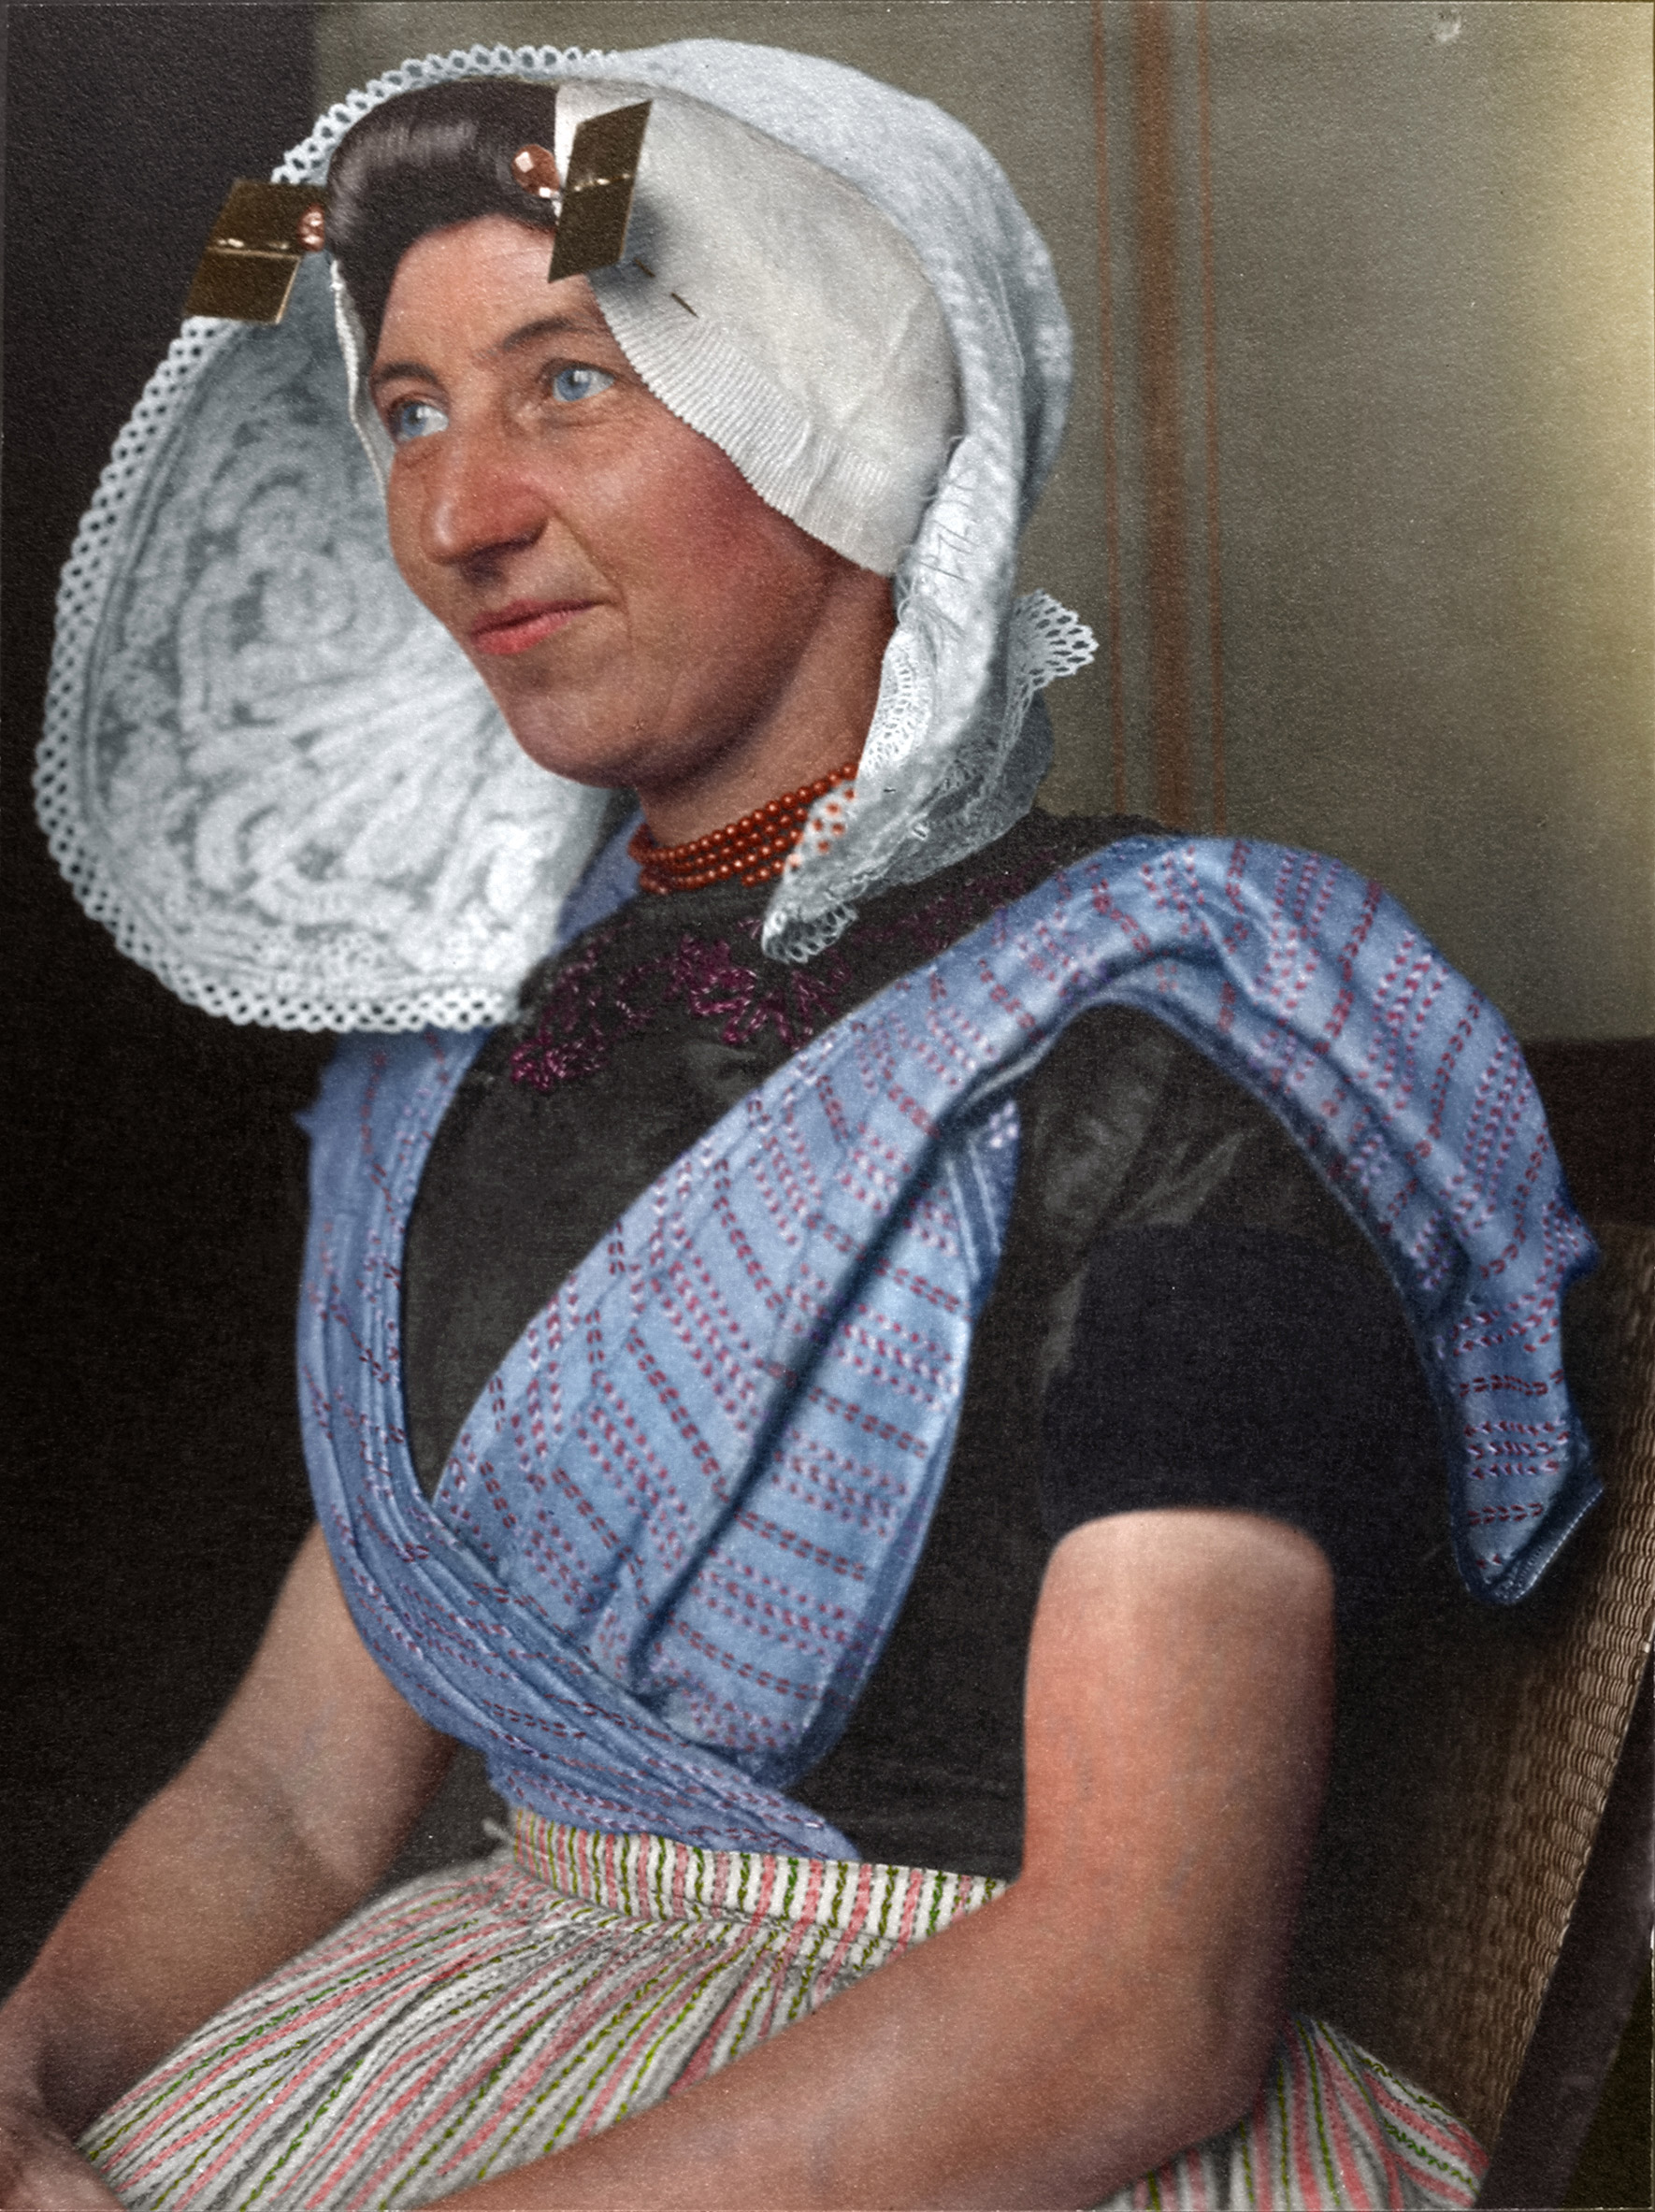 Portrait of a Dutch woman at the Ellis Island Immigration Station, circa 1905-1914.